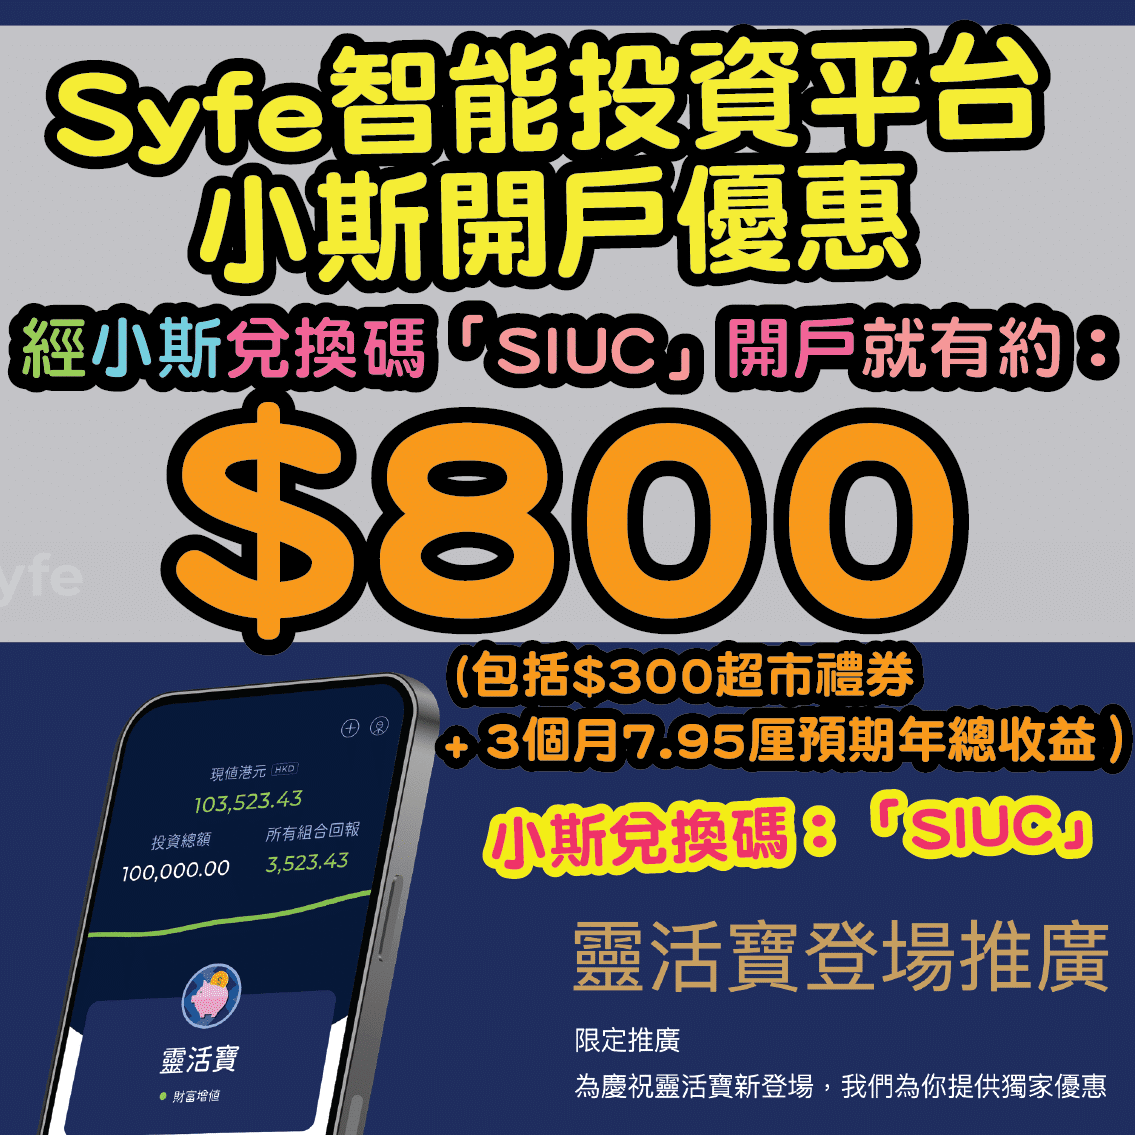 【Syfe智能投資平台小斯開戶優惠！】用小斯兌換碼「SIUC」開戶，就有獨家$300超市禮券 + 3個月8.1厘預期年總收益！合共可賺約$800！